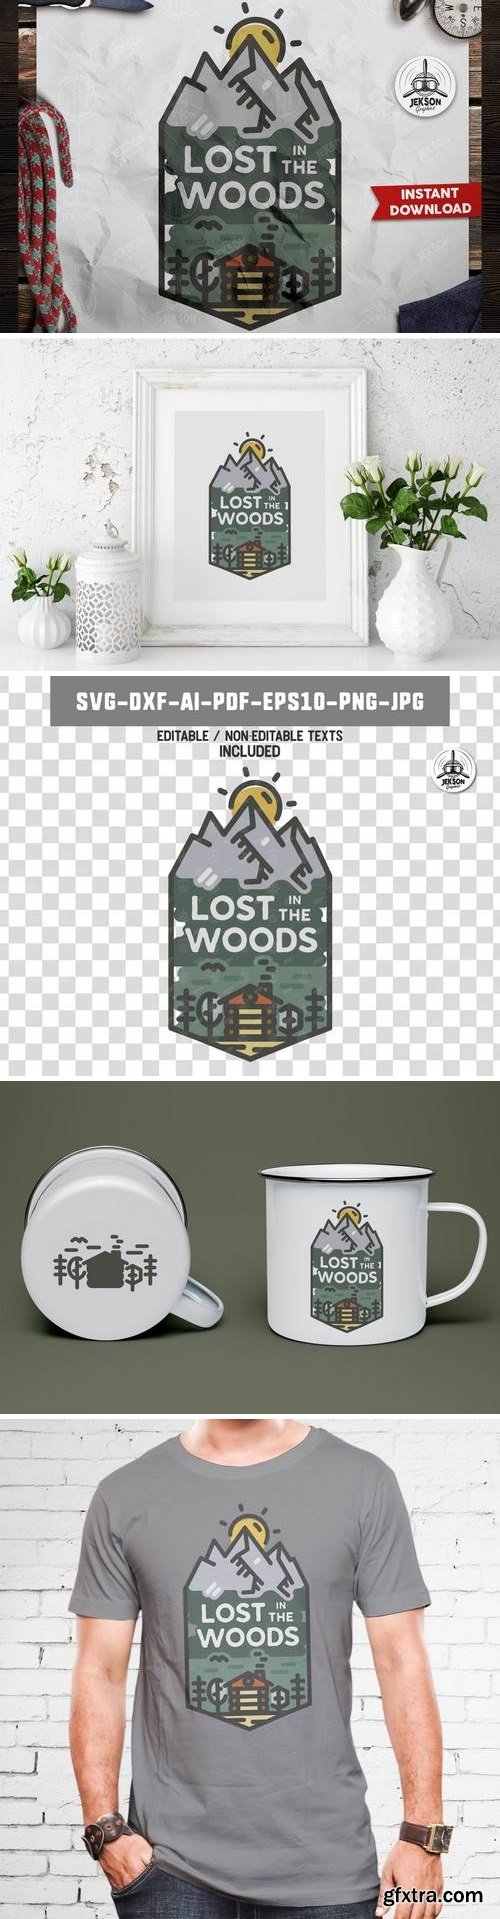 Lost in Wood Badge / Vintage Travel Logo Patch SVG